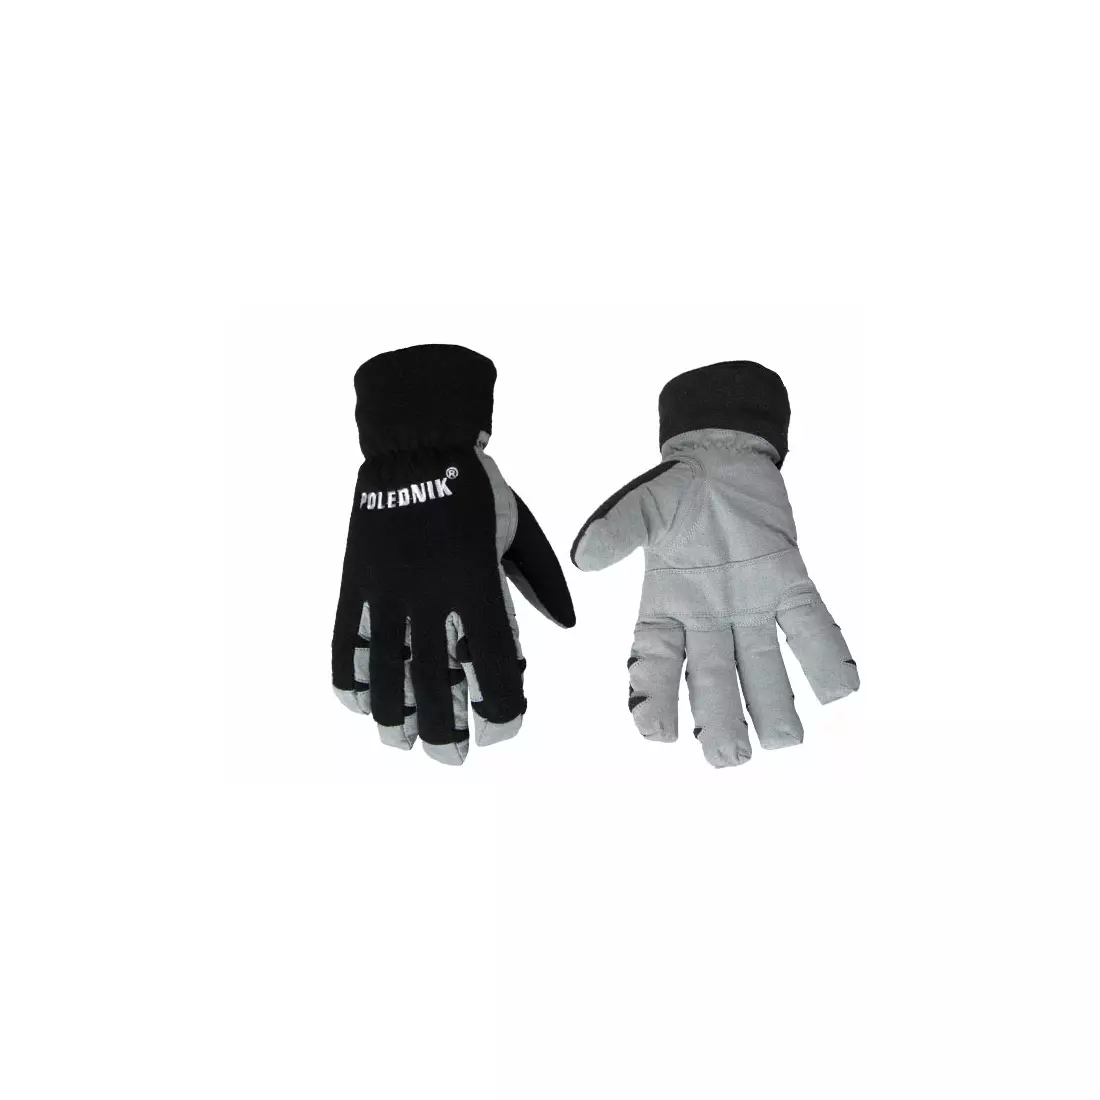 POLEDNIK winter gloves FLEECE XCS